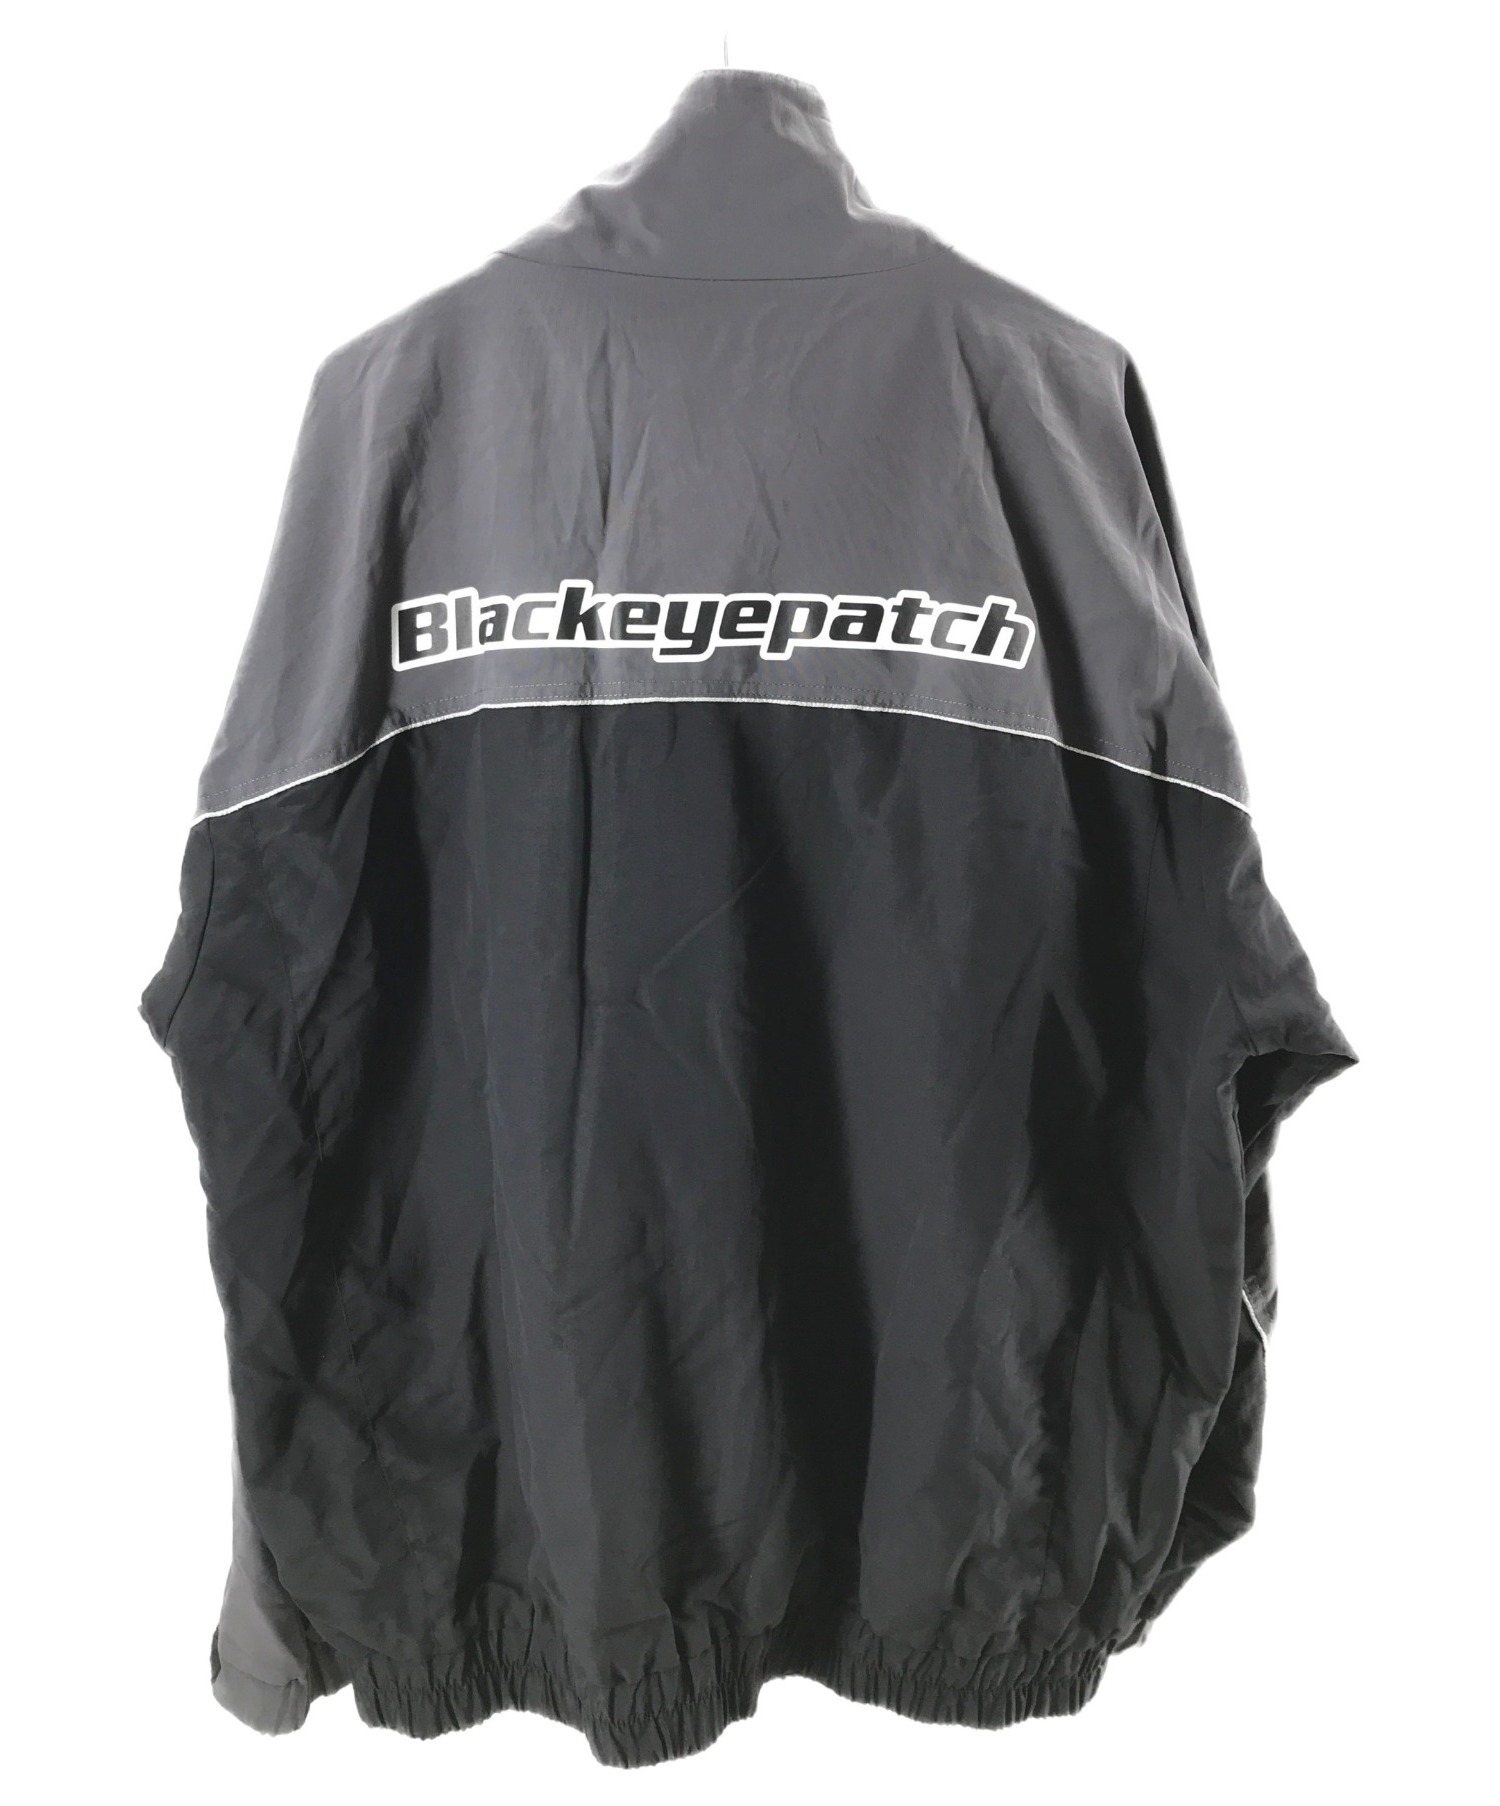 BlackEyepatch (ブラックアイパッチ) ナイロンジャケット グレー サイズ:XL